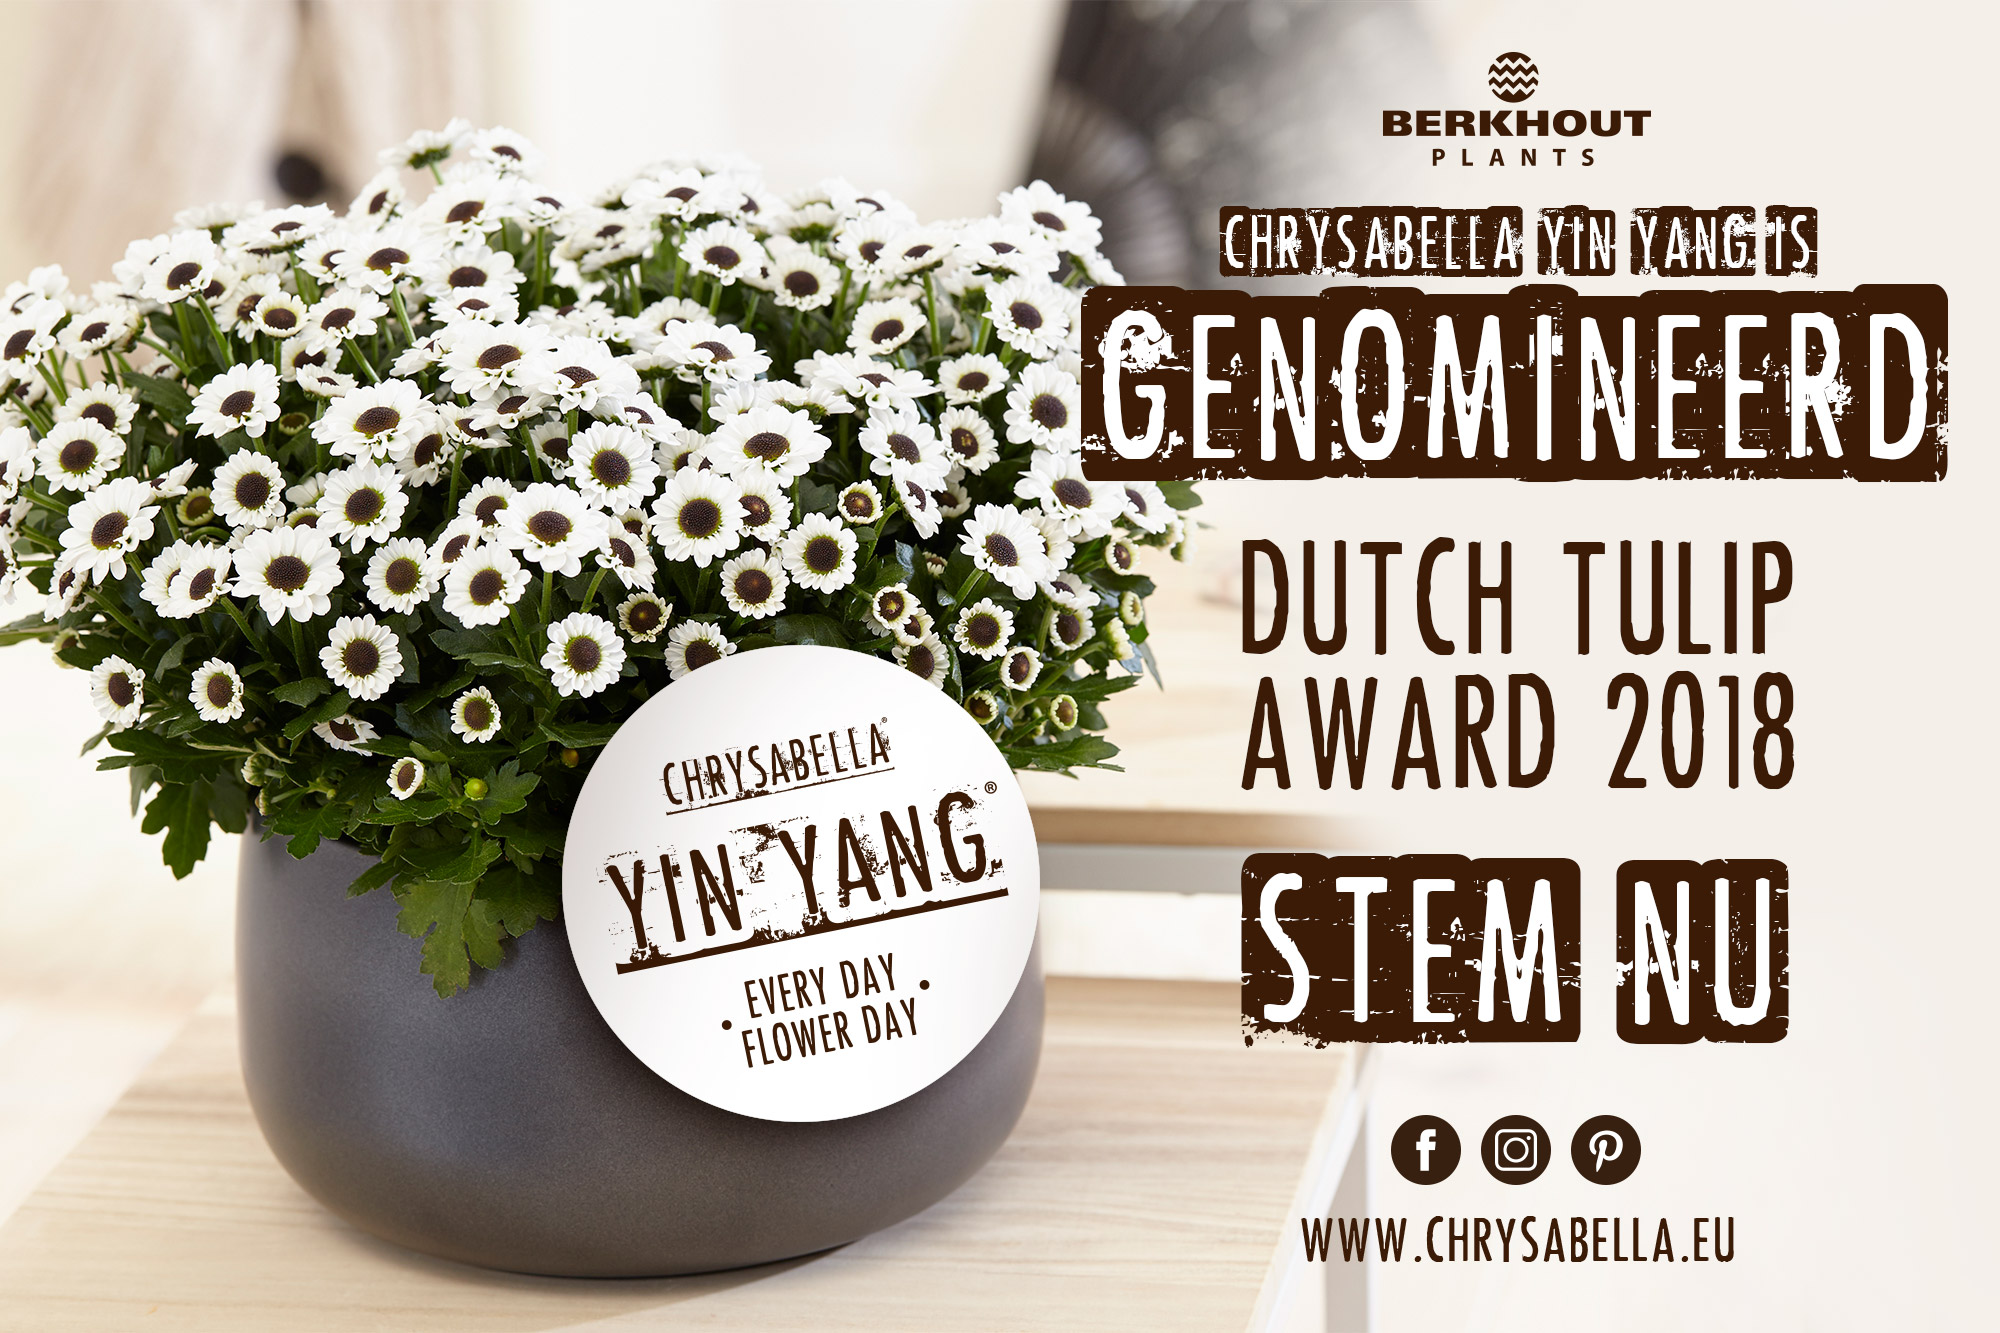 berkhout chrysabella yin yang genomineerd